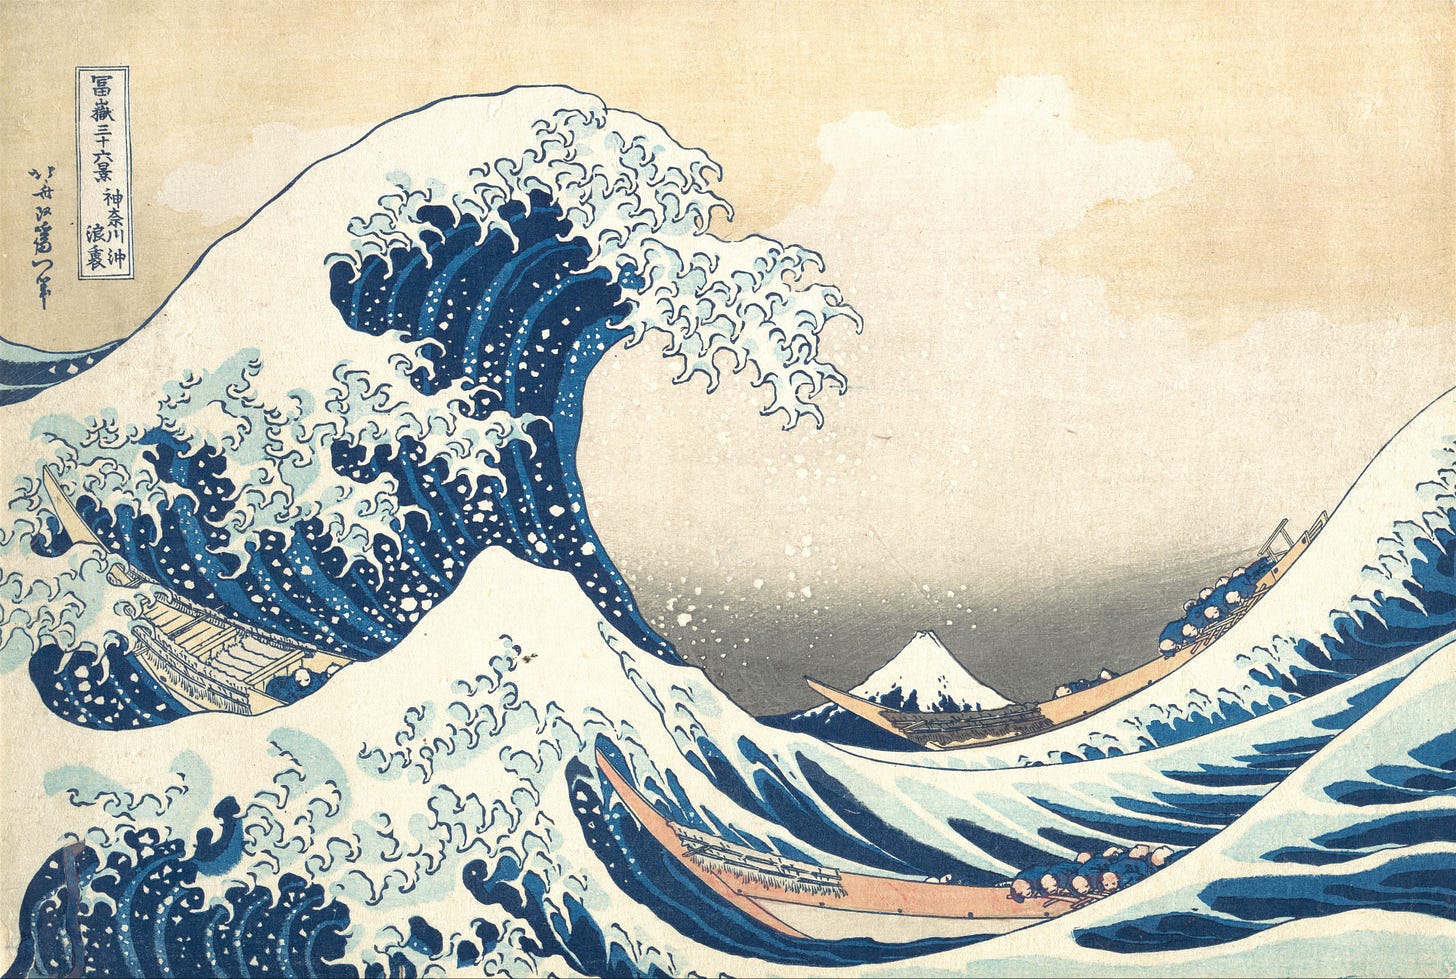 Hokusai returned to this motif throughout his life, finally nailing it at 72